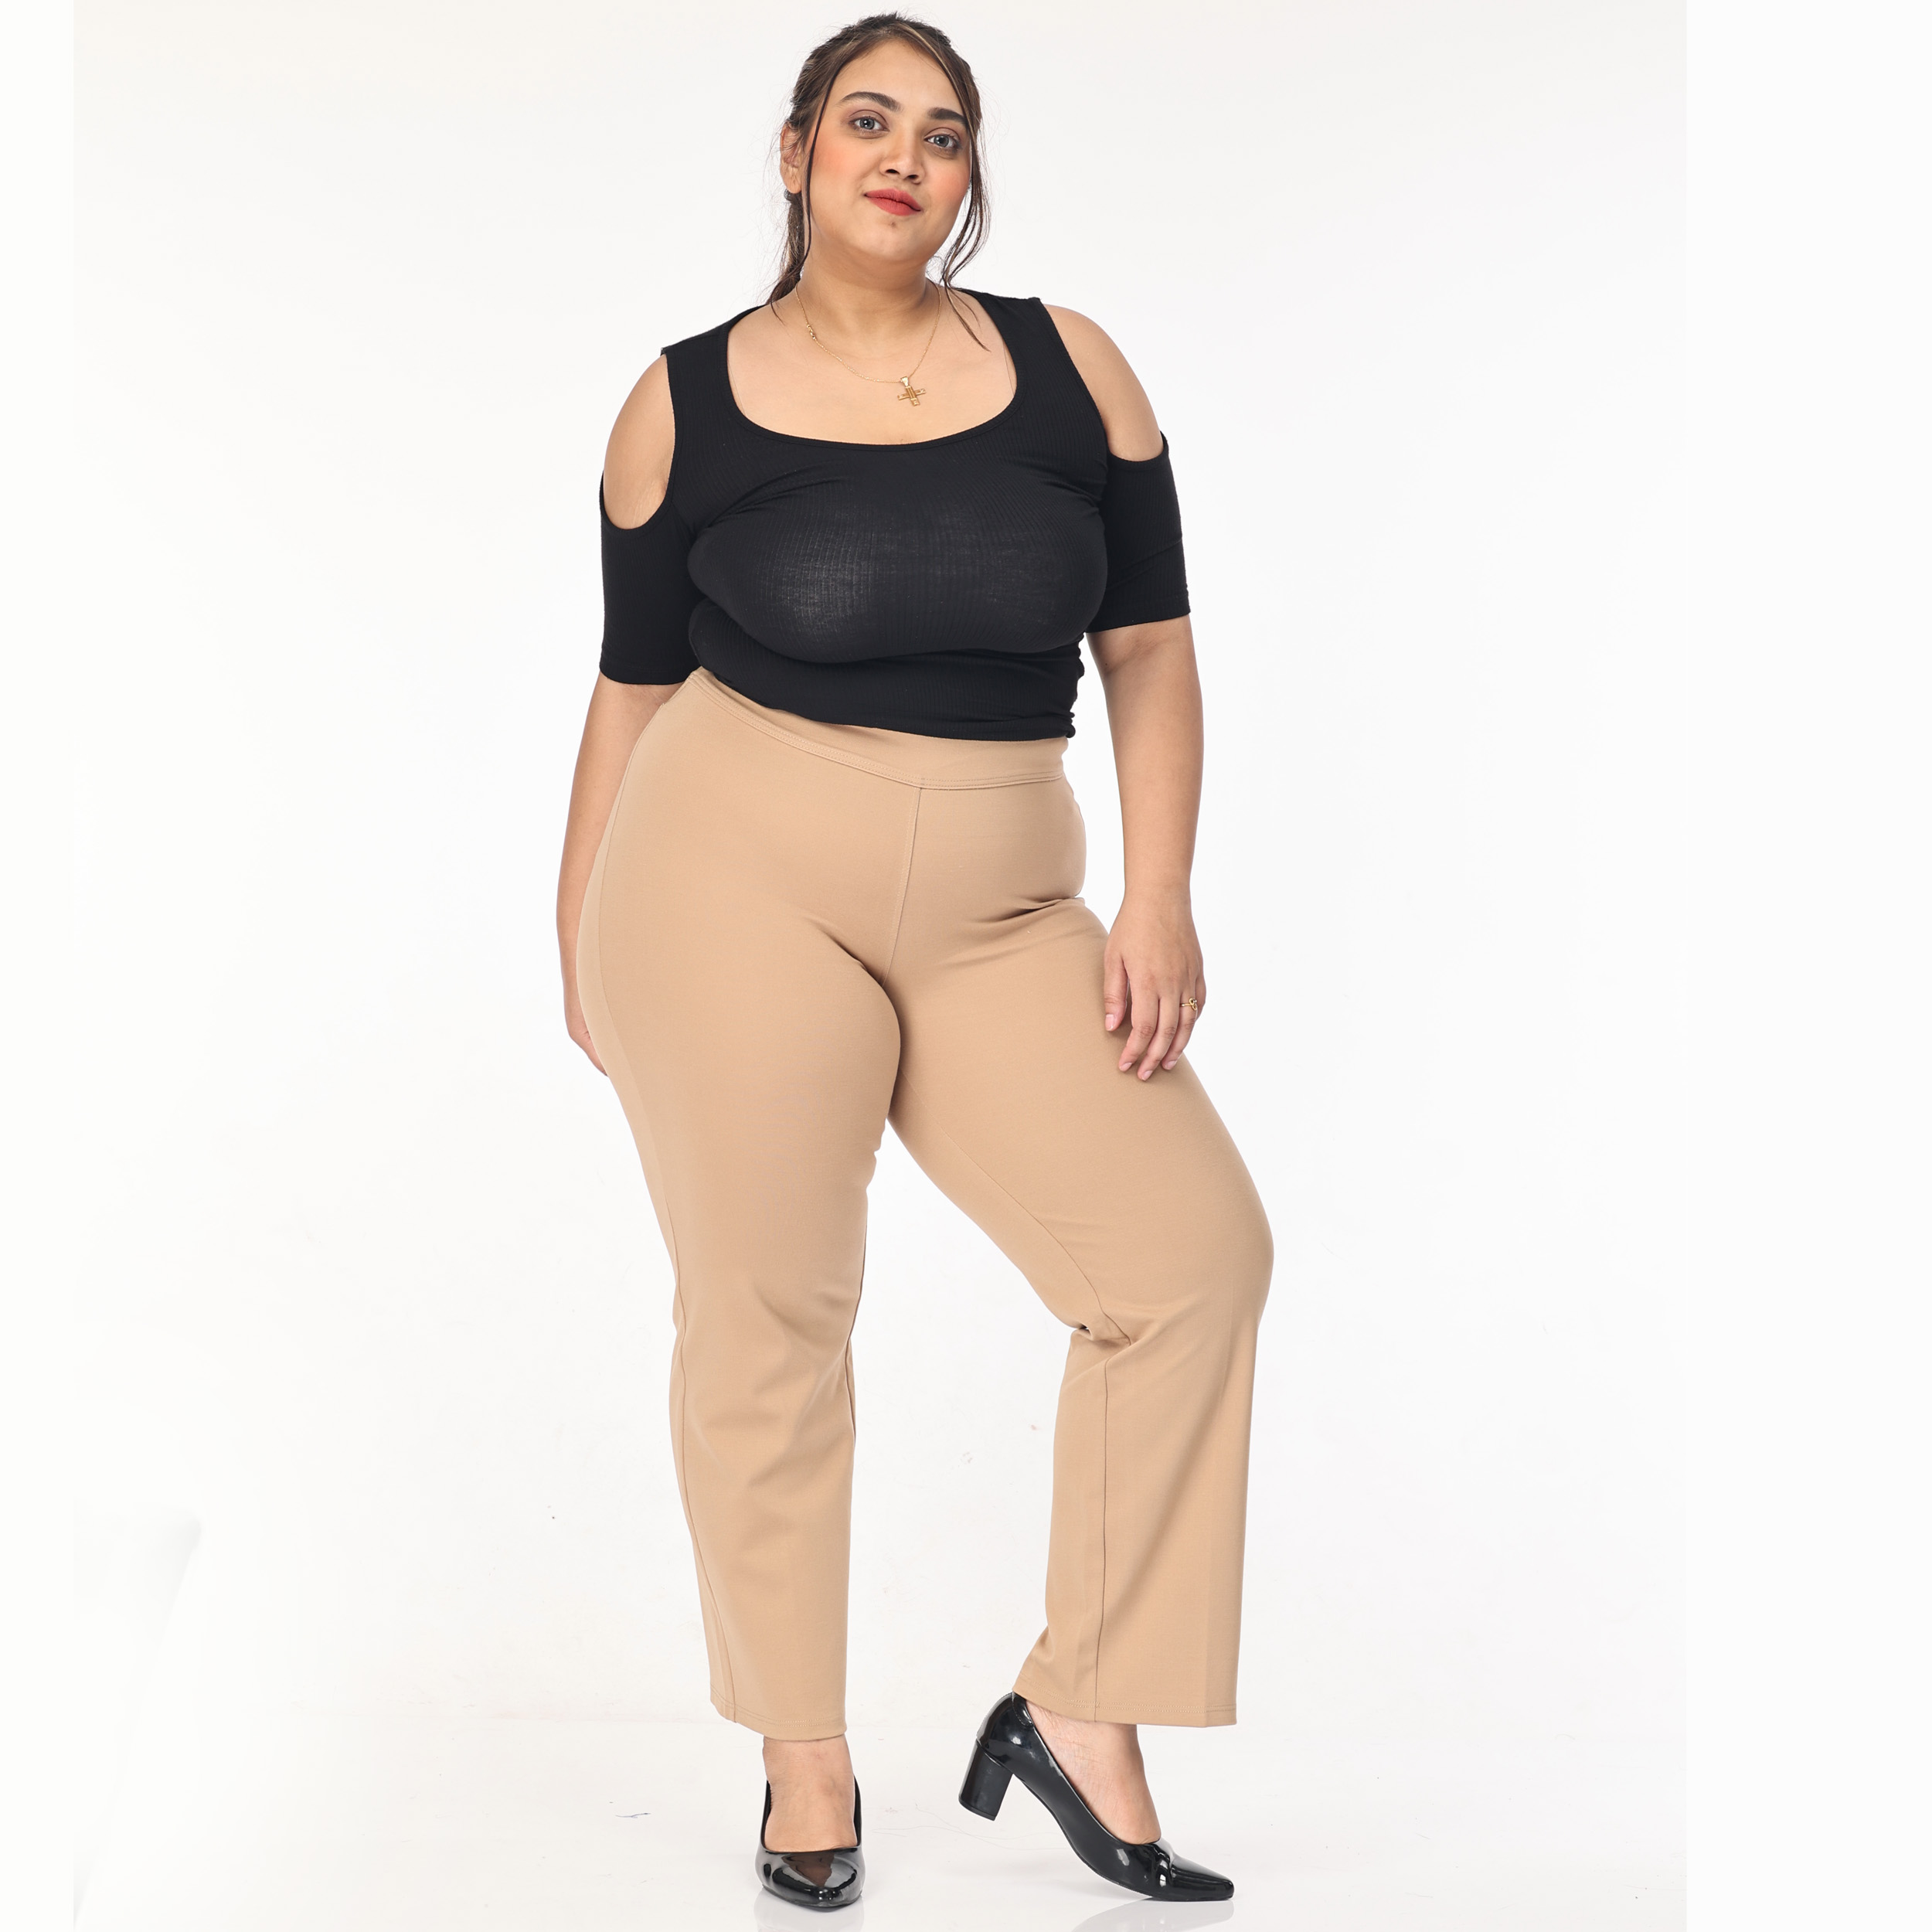 Brown pant women - Plus size - Straight leg 2 back pockets - Belore Slims